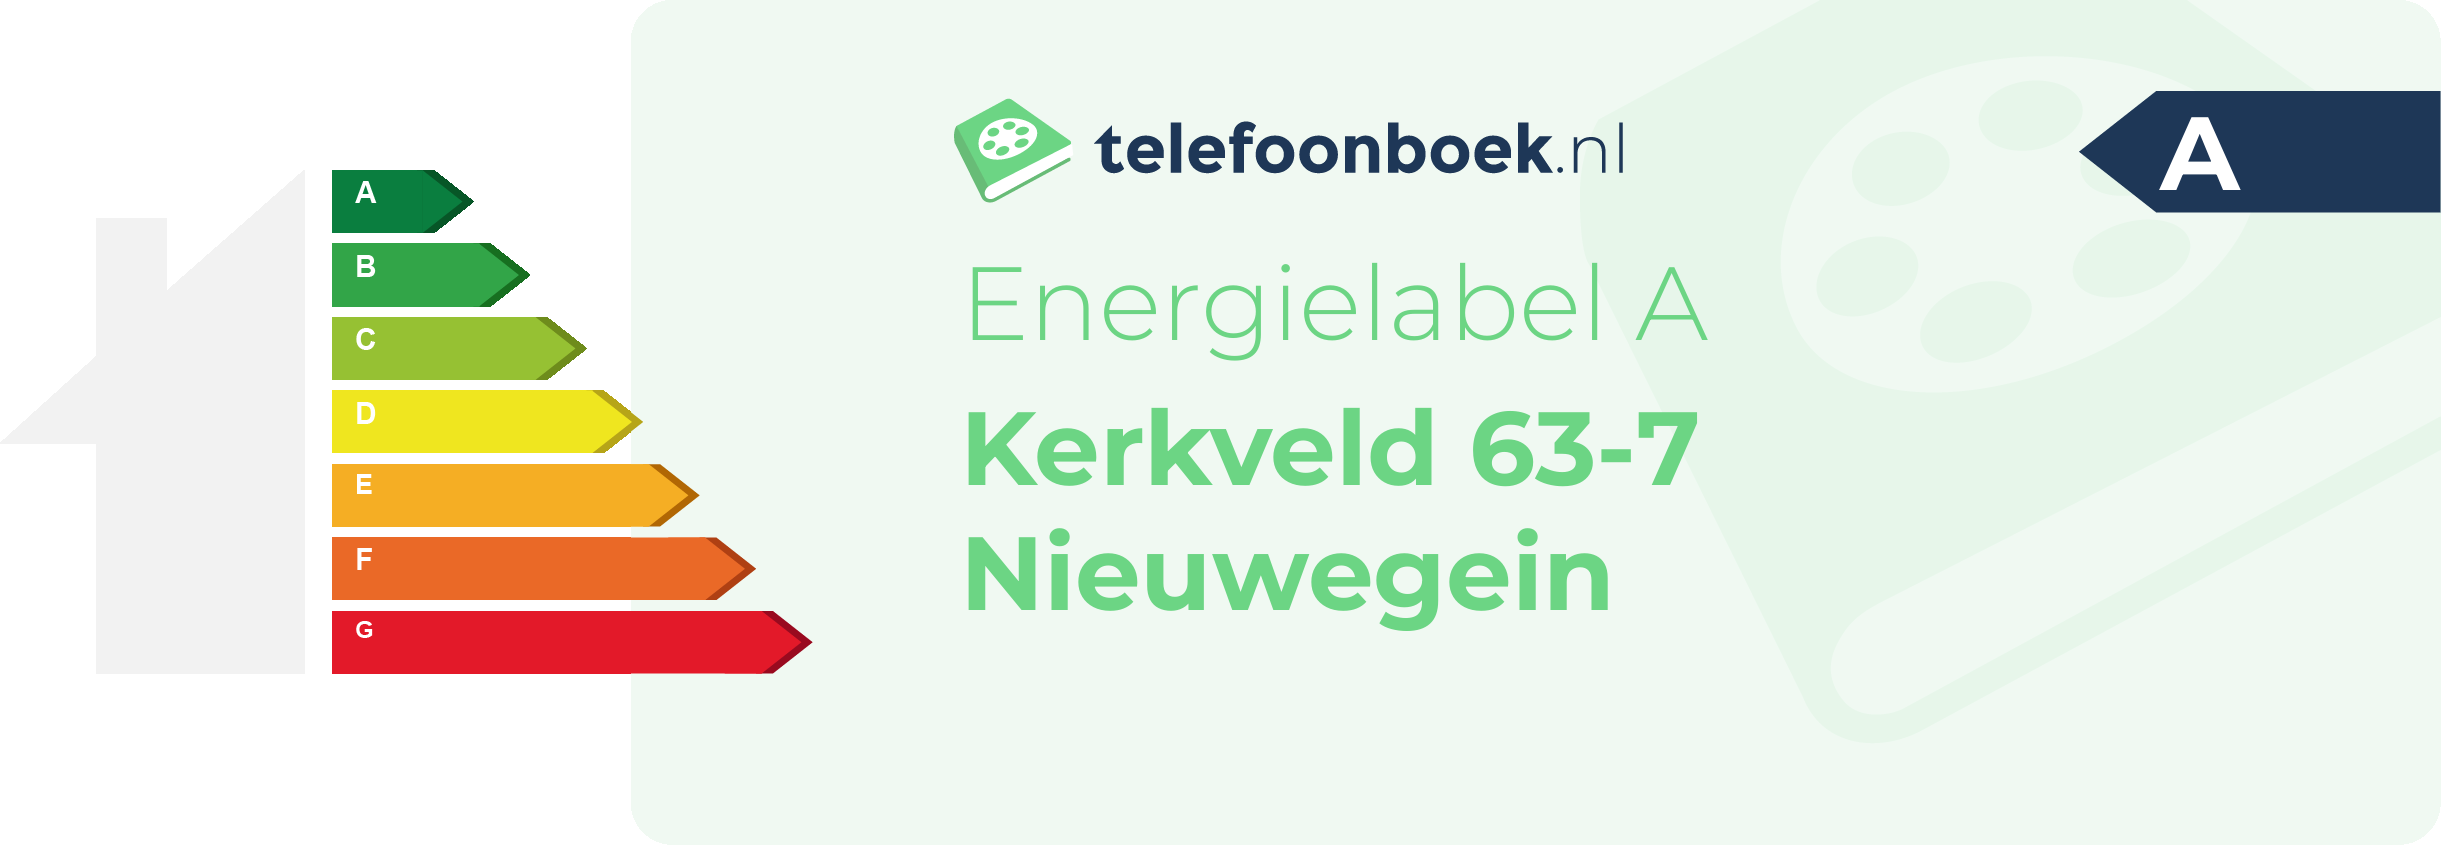 Energielabel Kerkveld 63-7 Nieuwegein